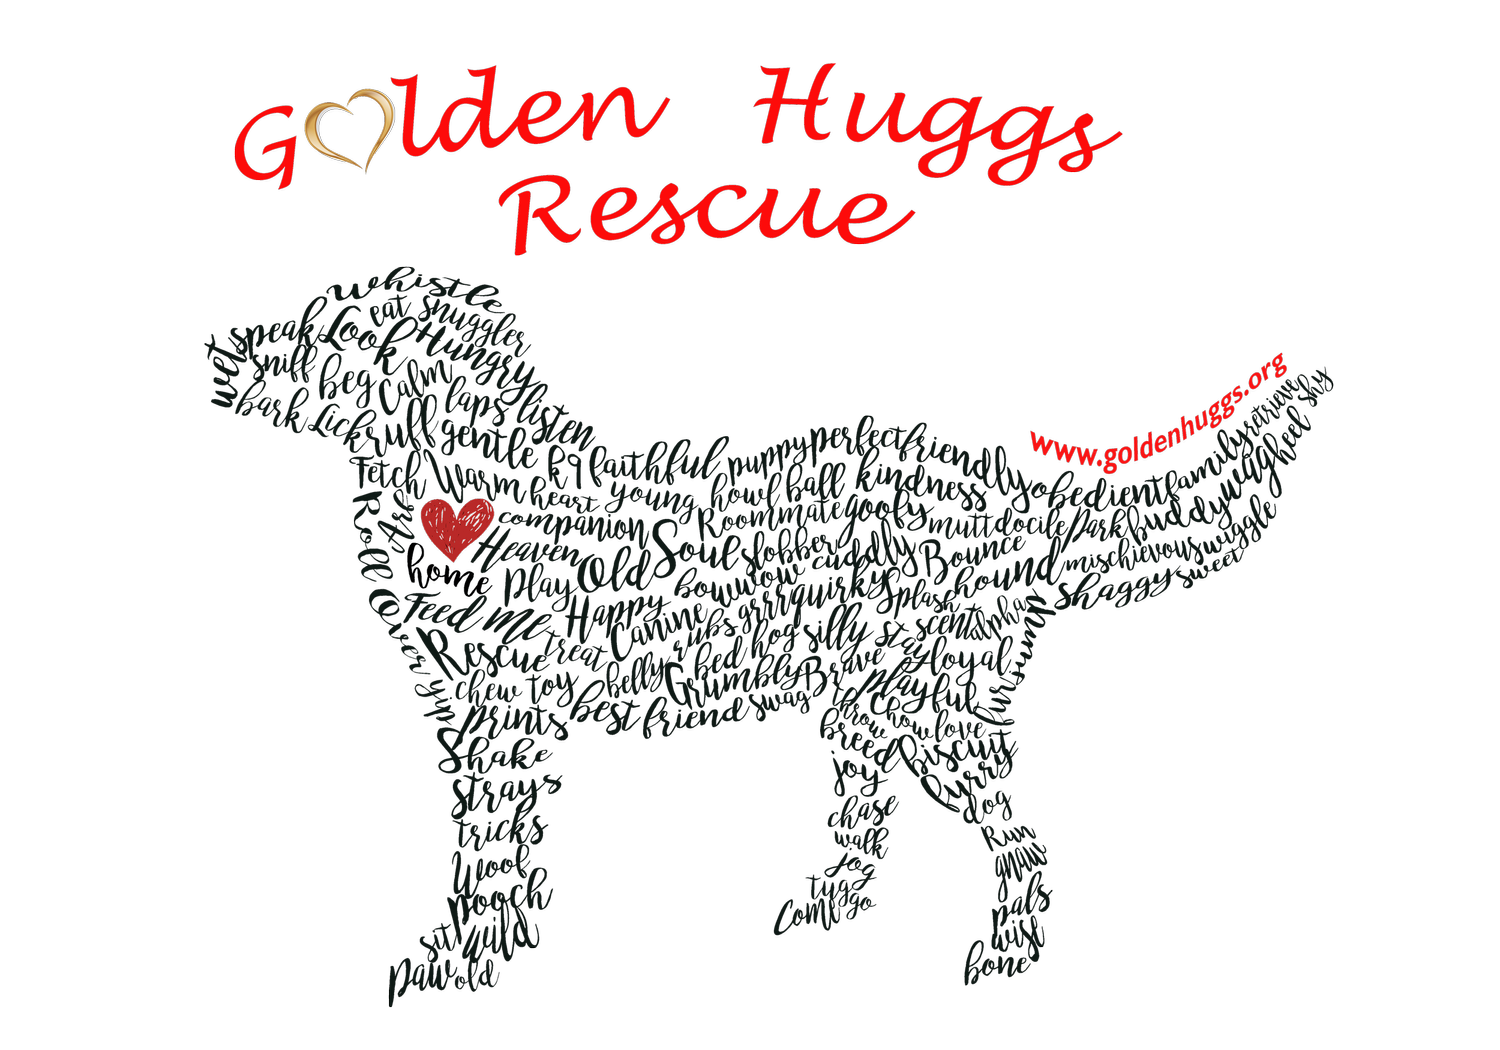 Golden Huggs Rescue, Inc.